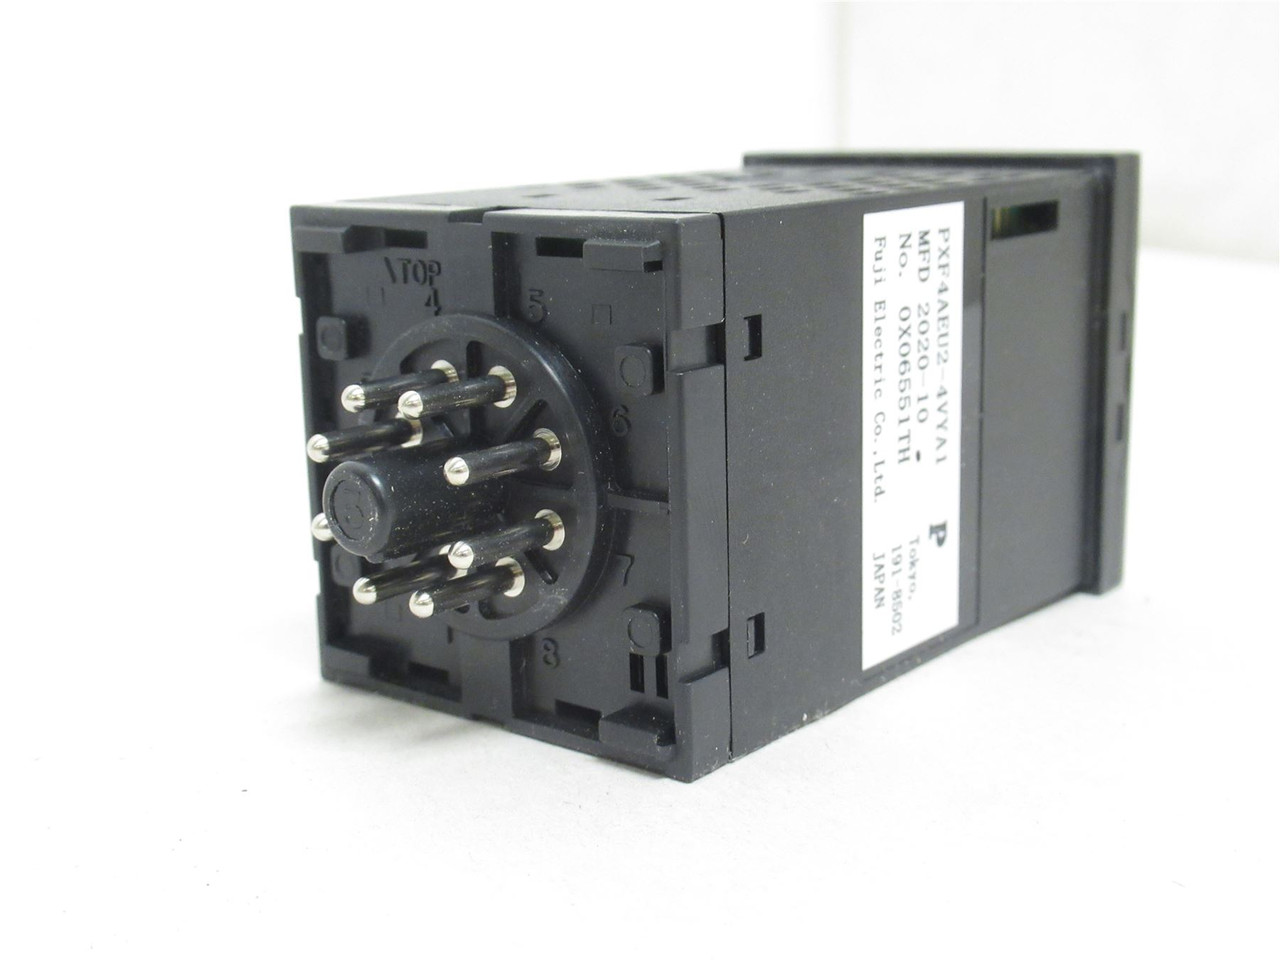 Fuji PXF4AEU2-4VYA1; Temp Controller 100-240VAC; IP66